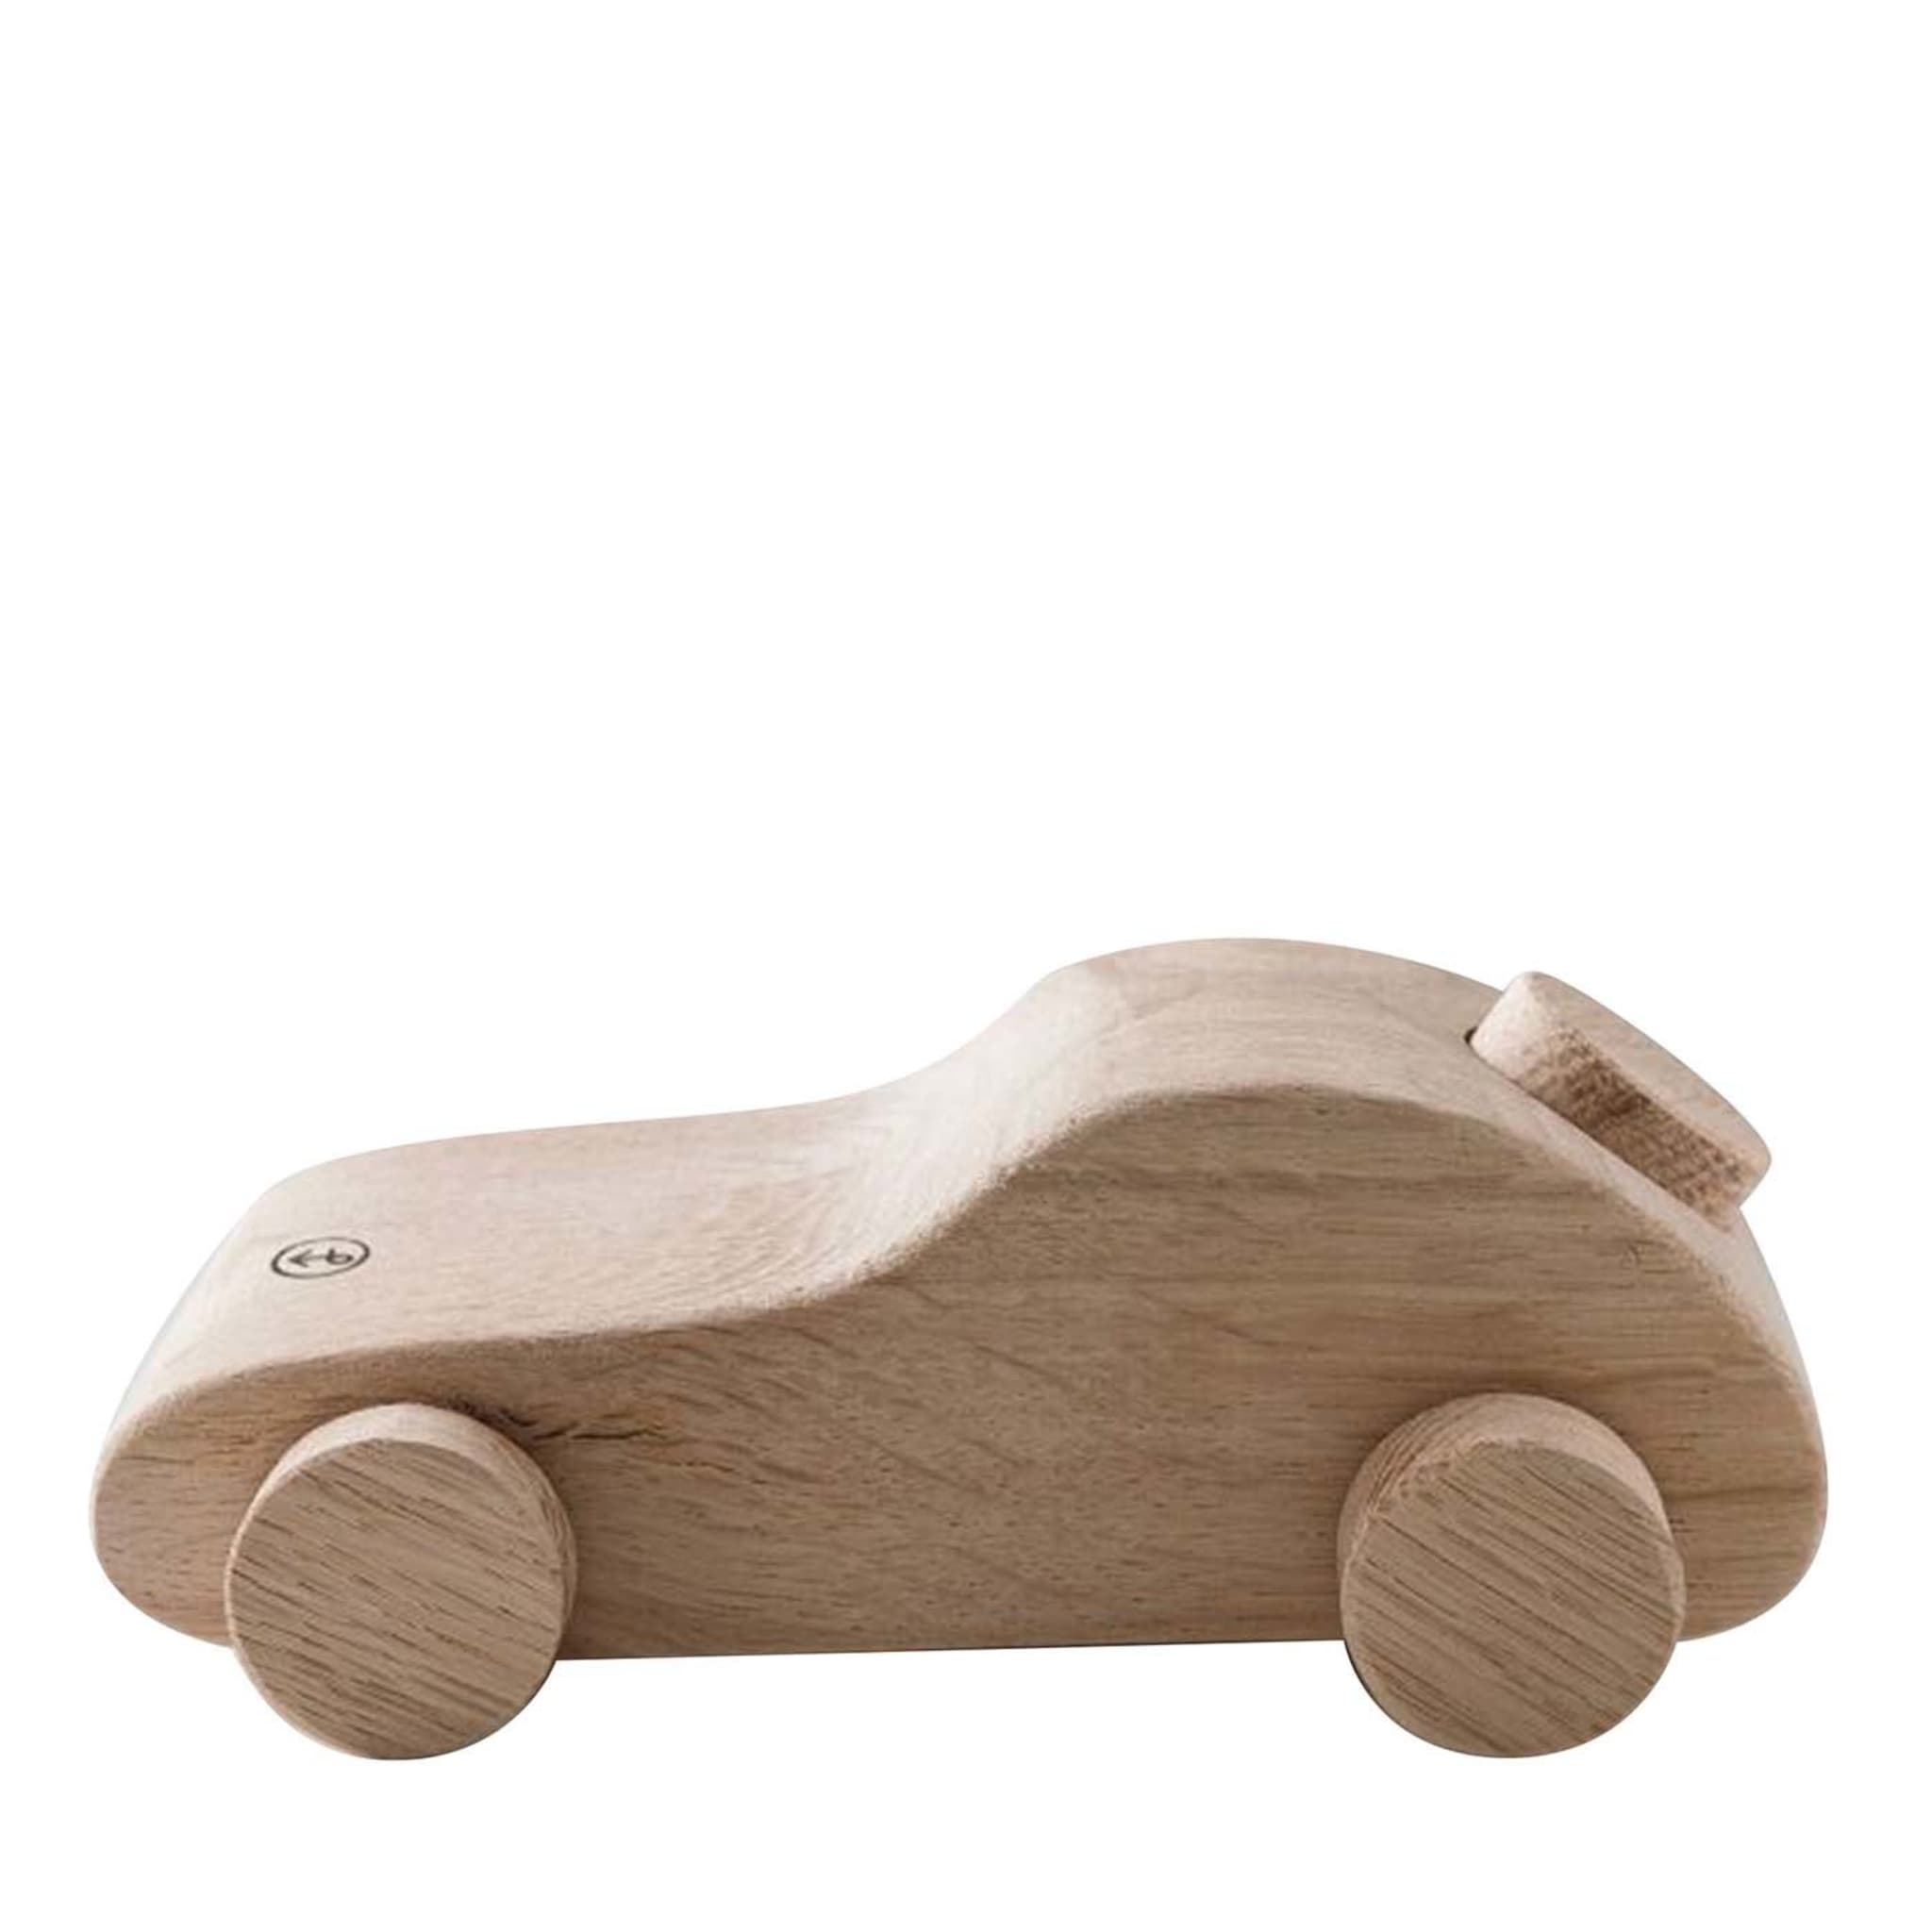 Lido Toy Car Wooden Sculpture by Matteo Ragni - Set of 2 - Main view